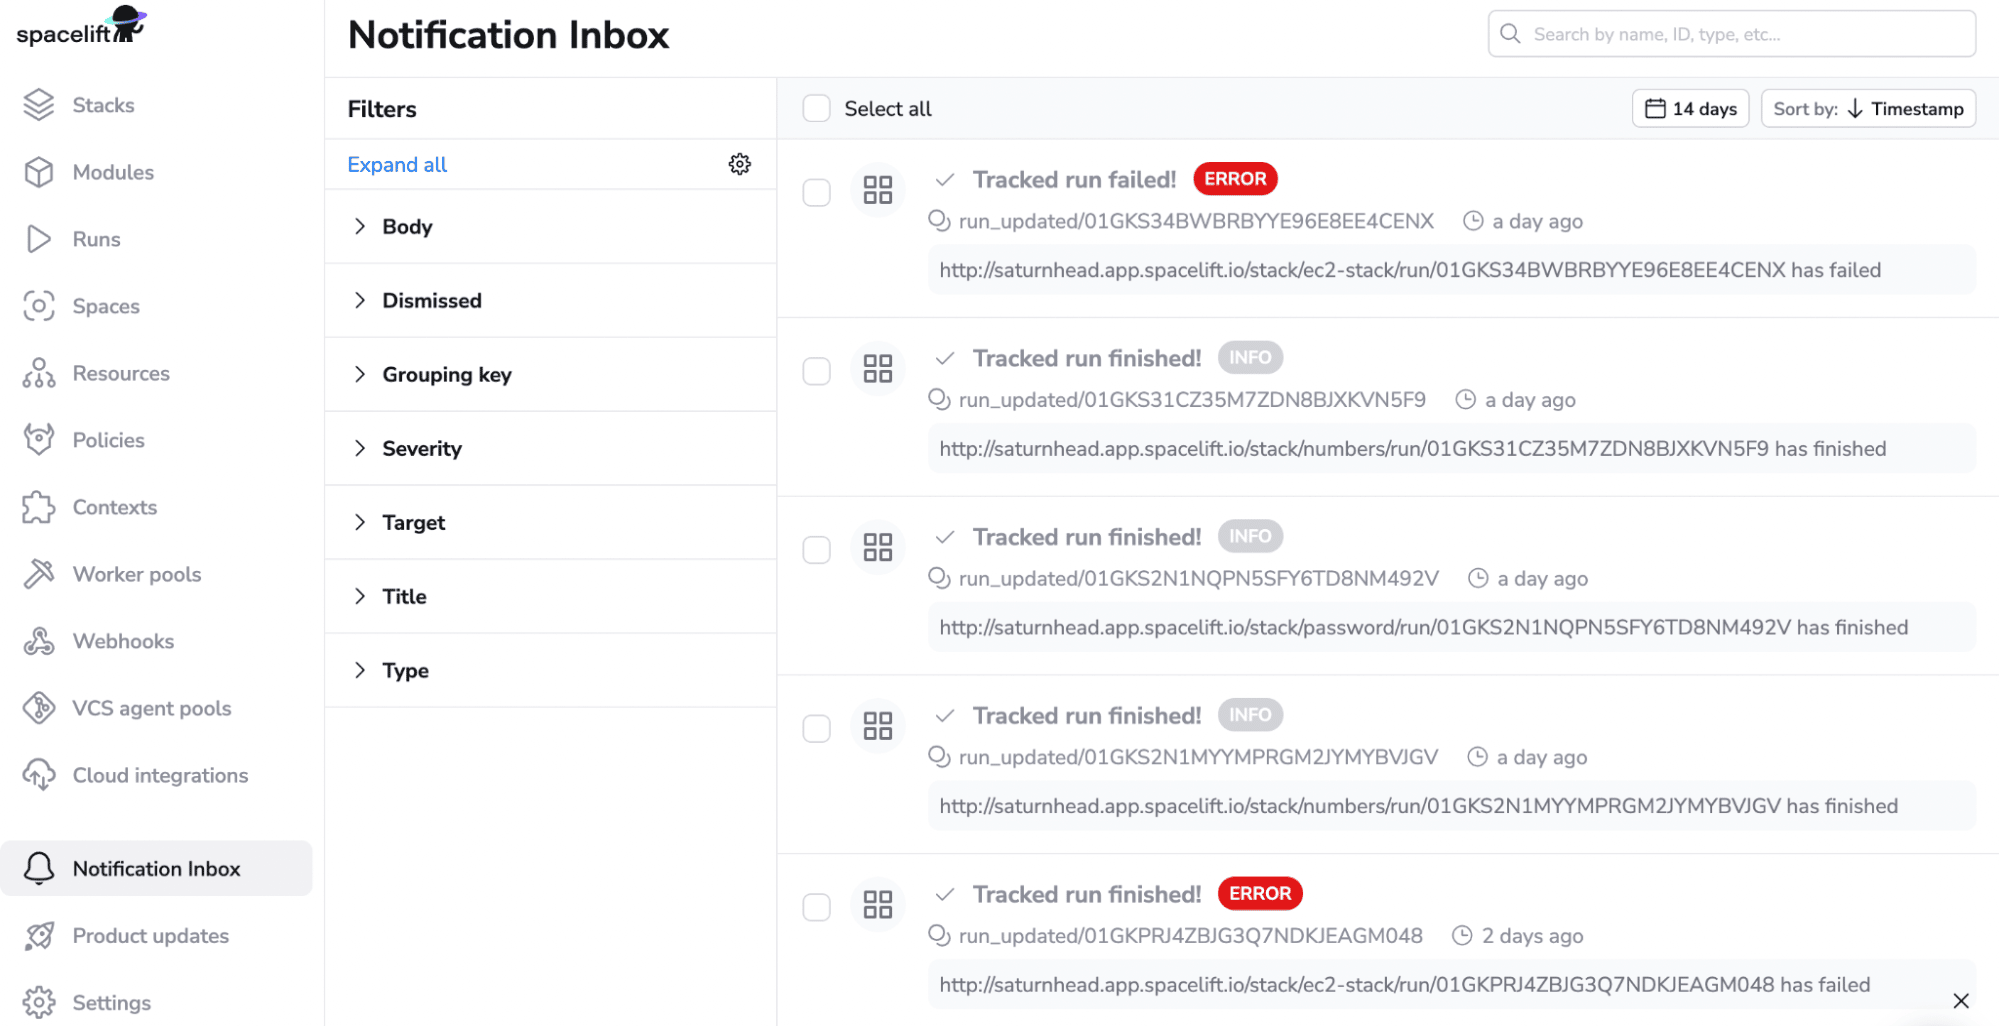 notification on a tracked run failure